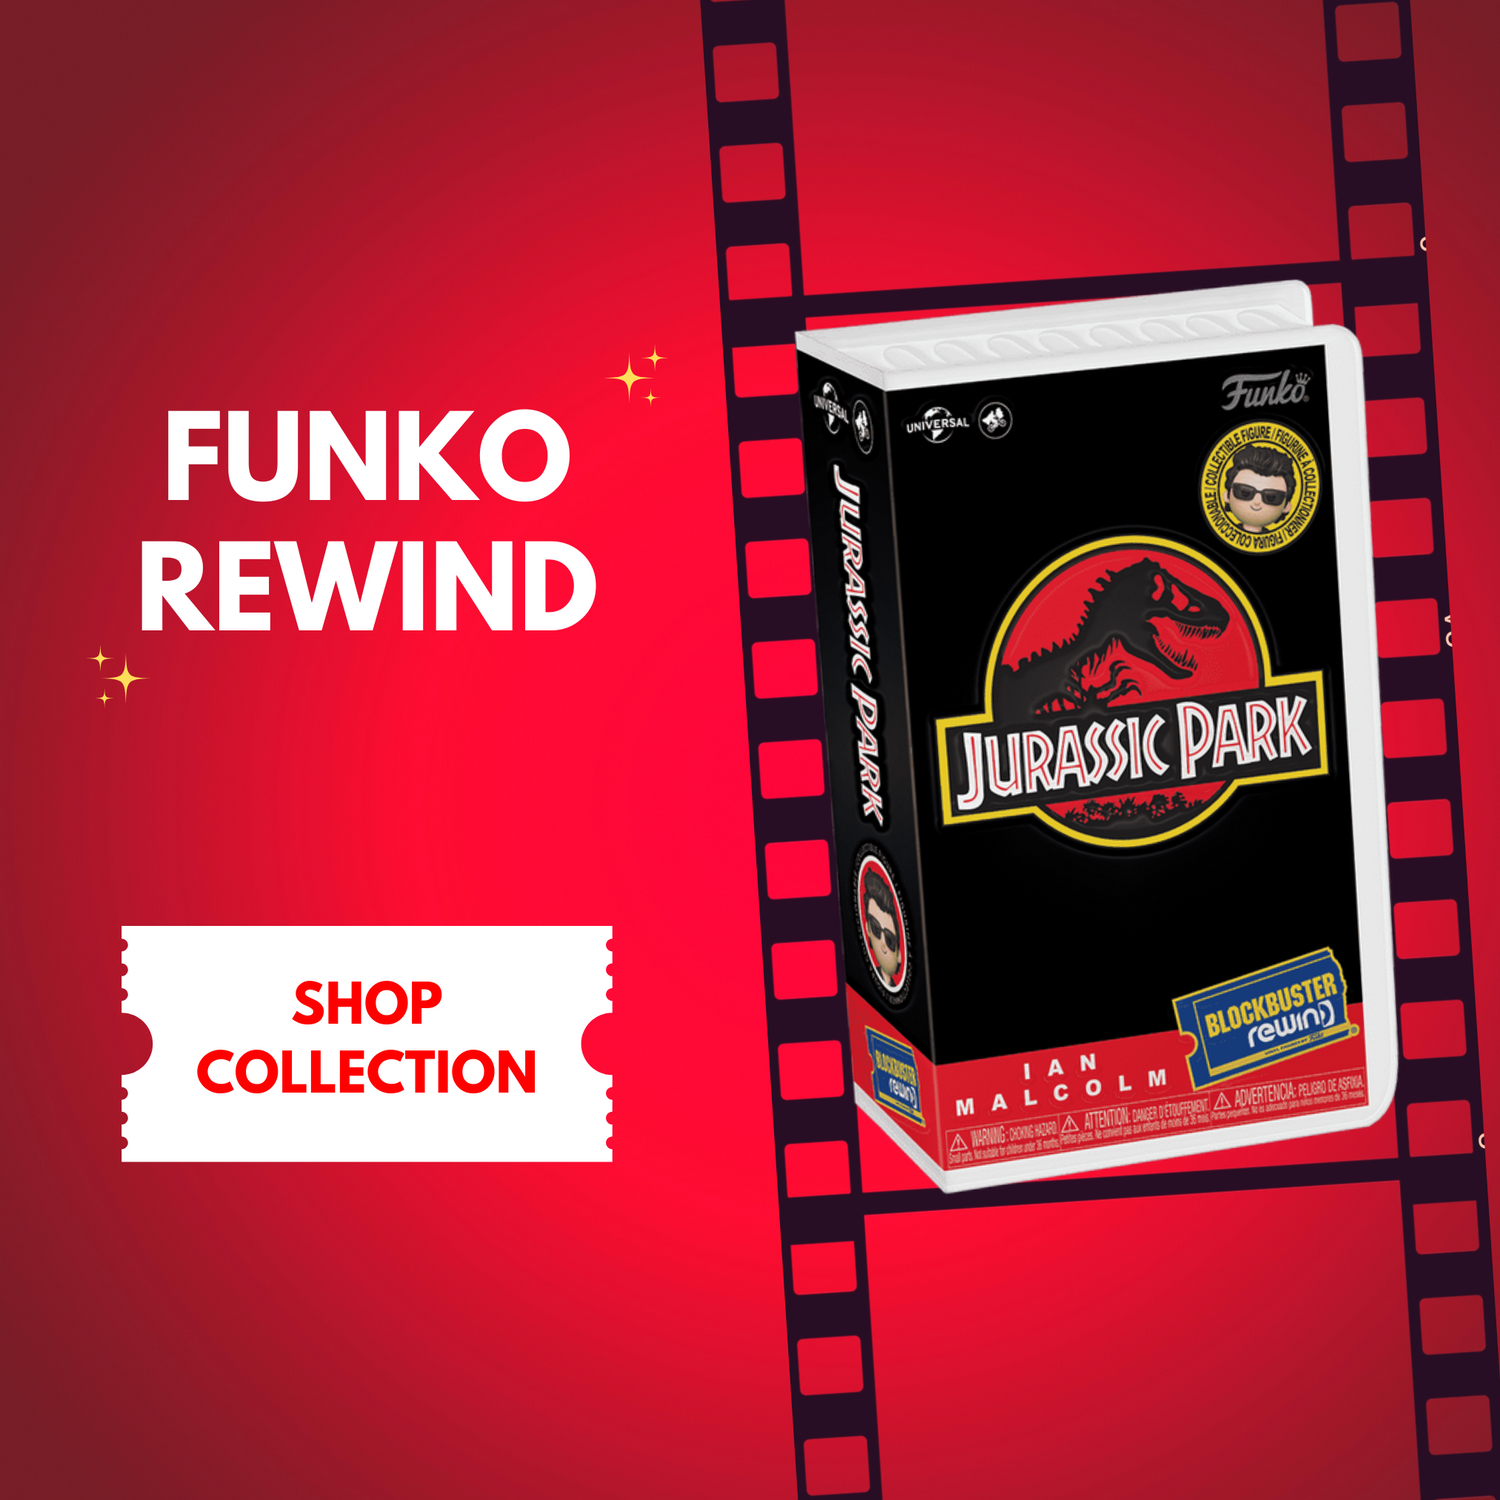 Funko Rewind